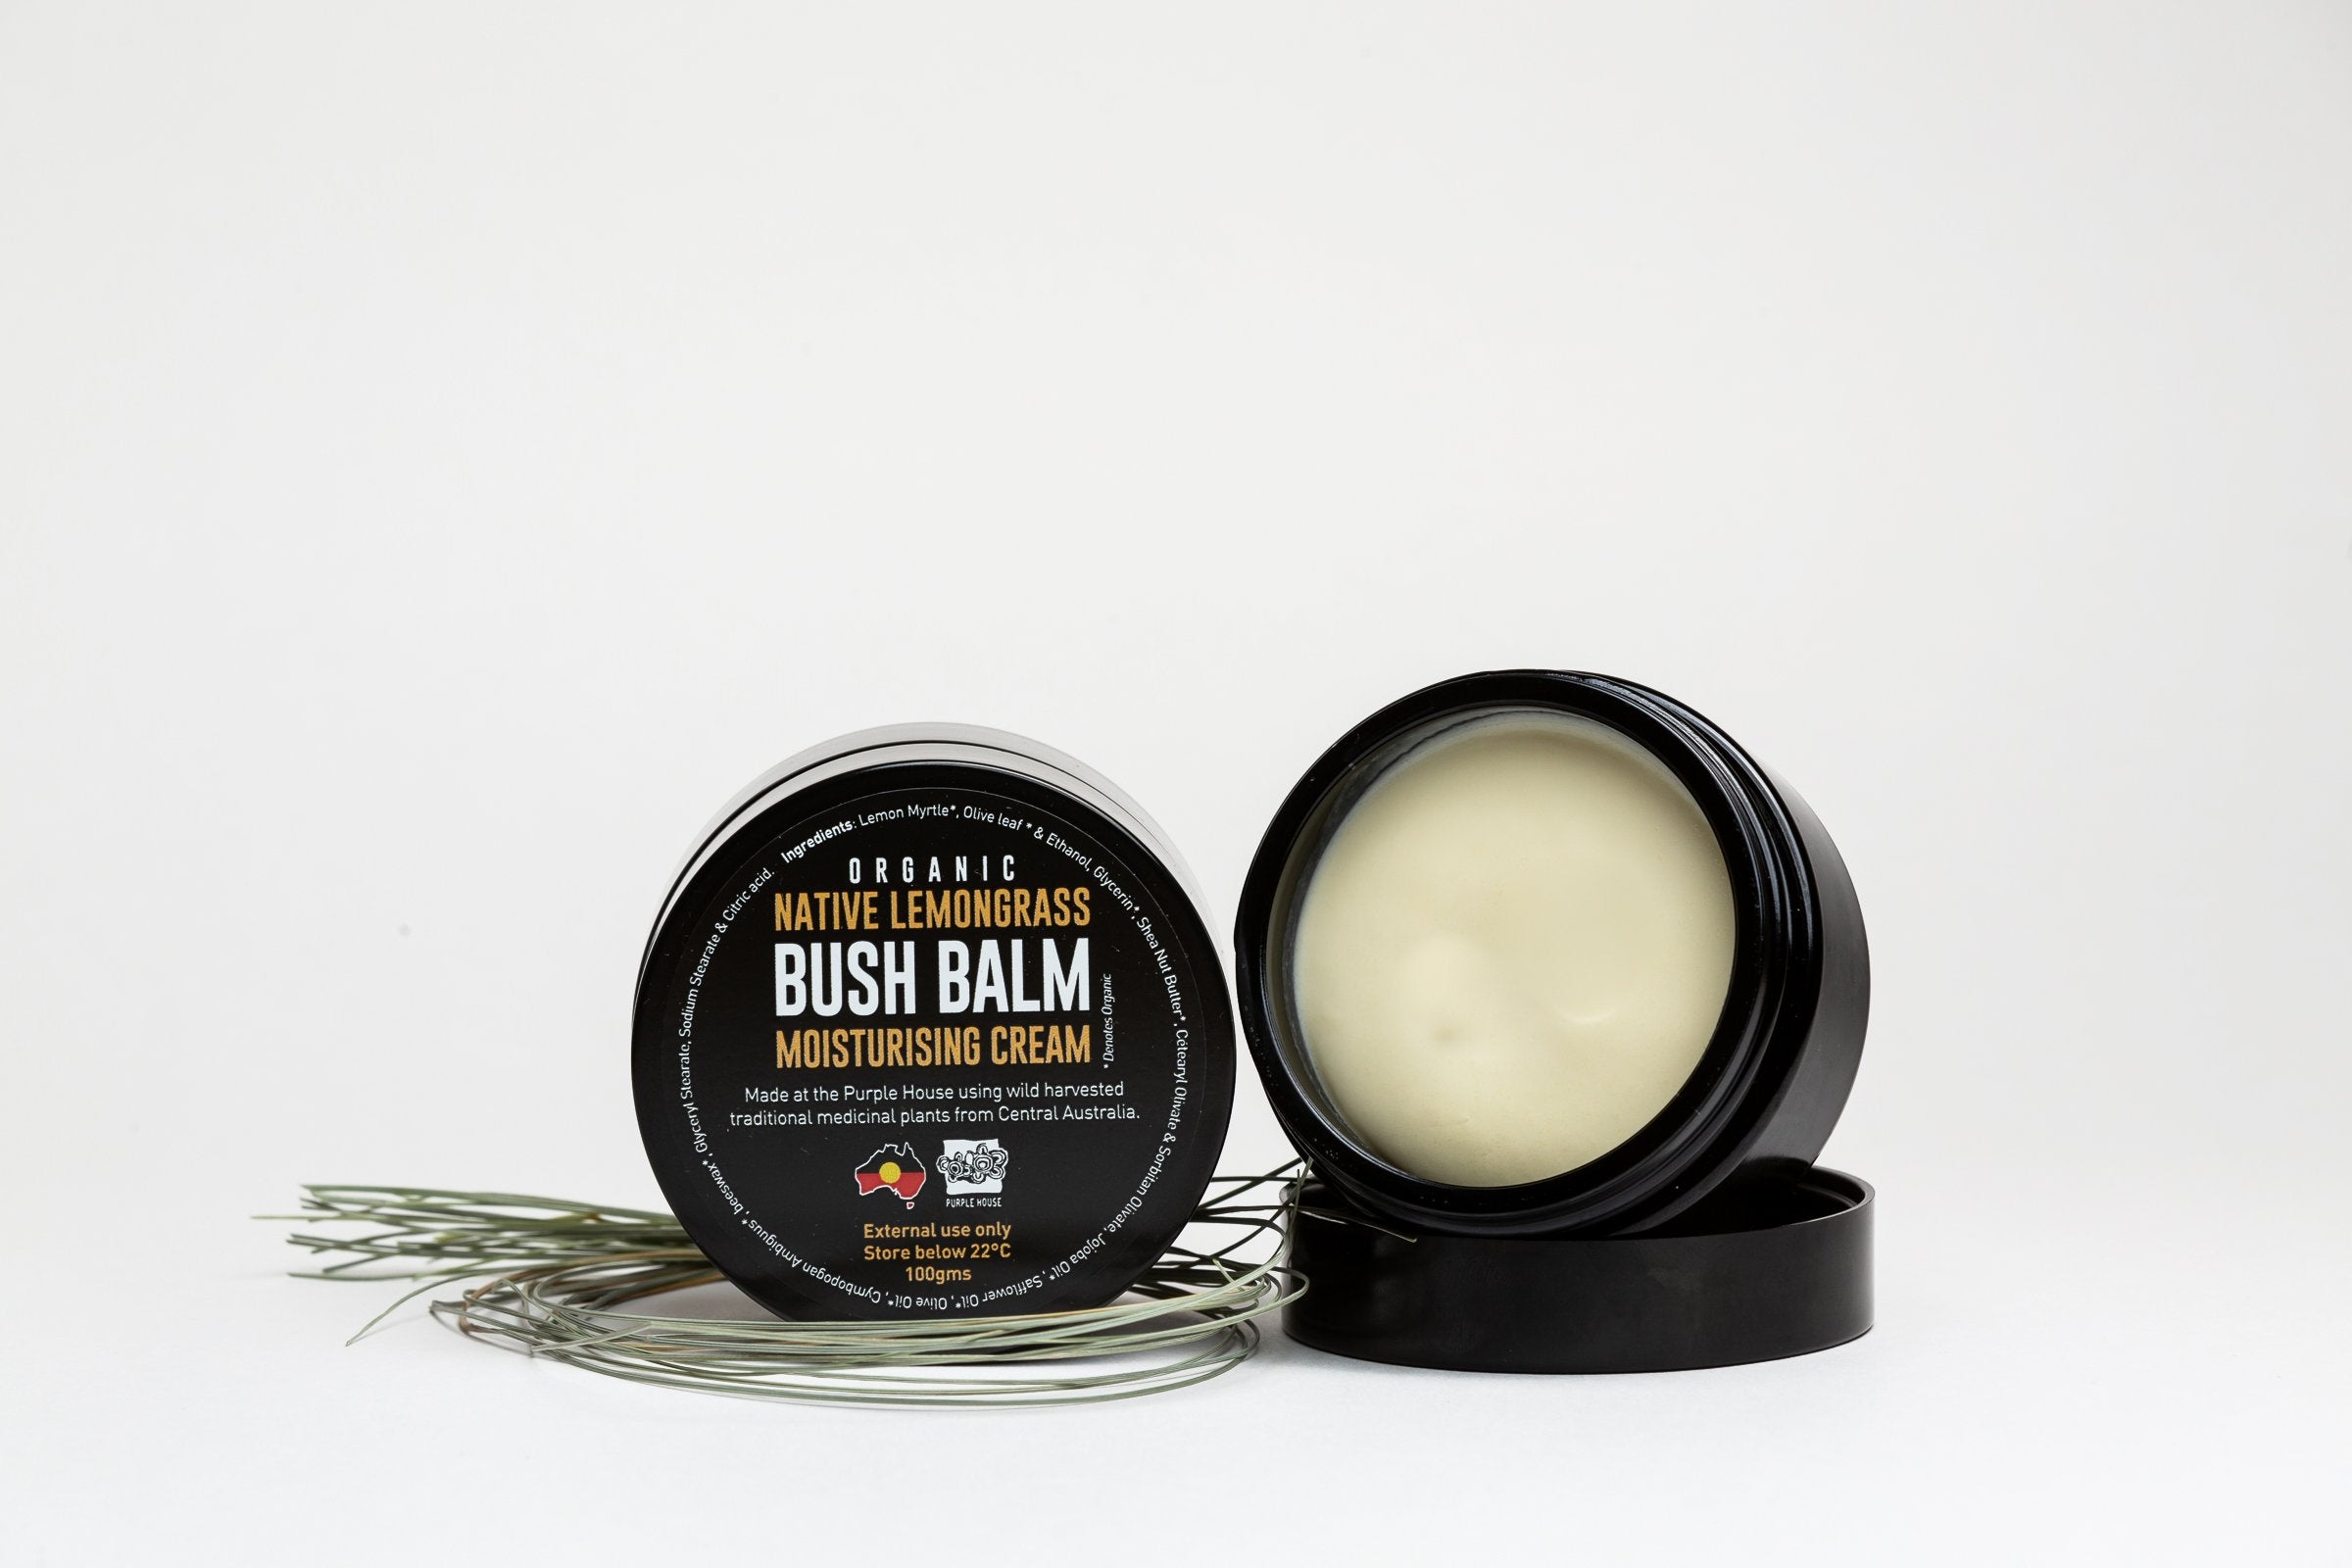 Organic Native Lemongrass Moisturising Cream 100g by Bush Balm